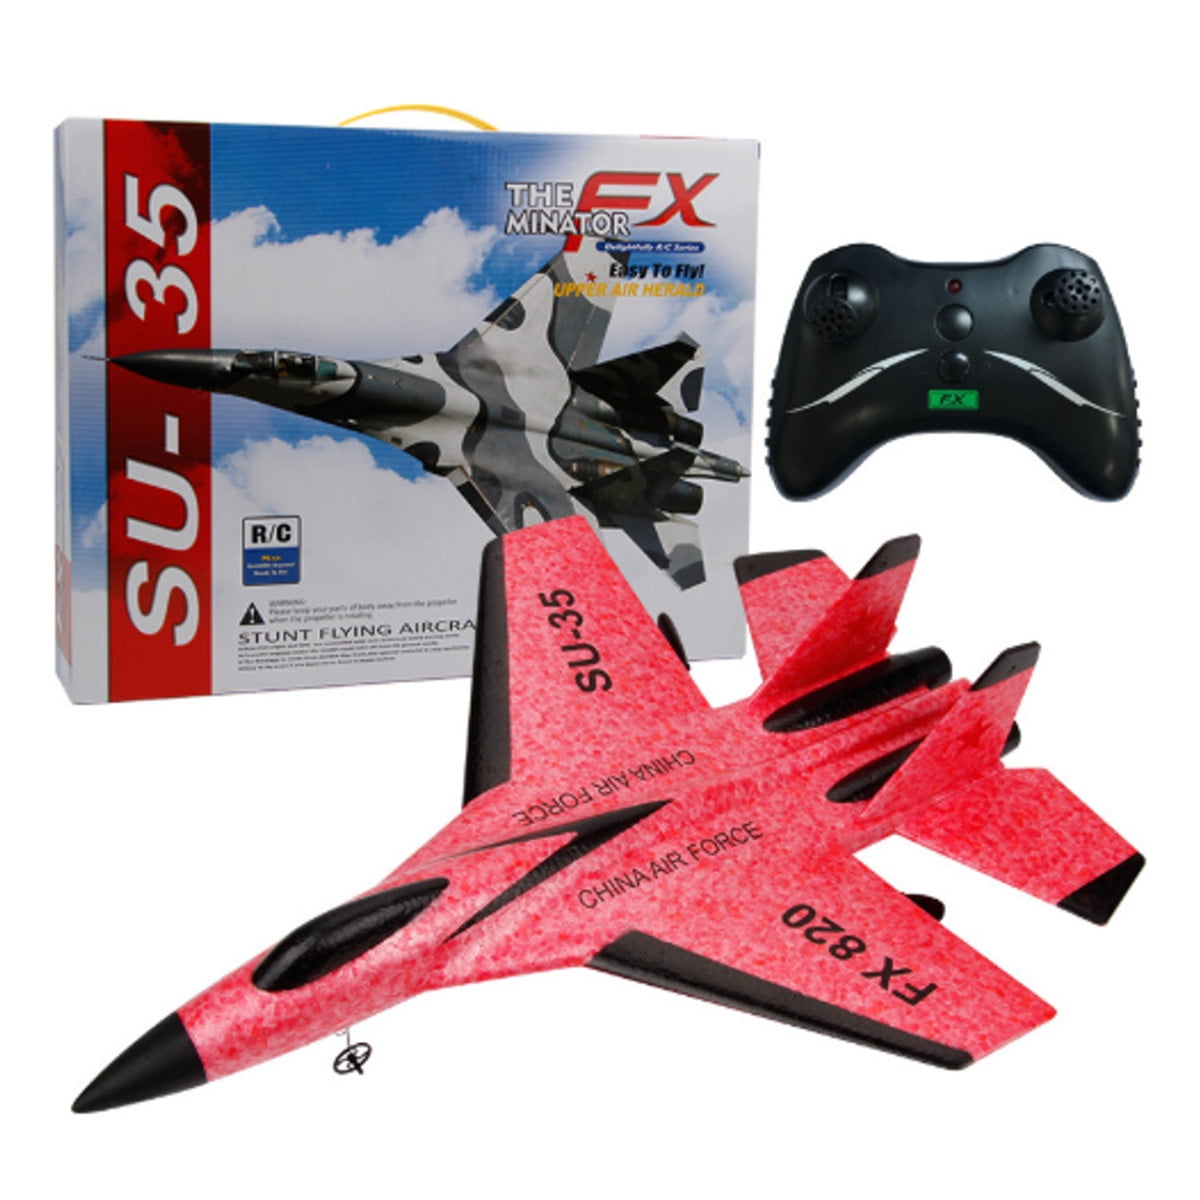 Phantom Rc Toy Plane Model Remote Control Fighter Jet Airplane Fx | My ...